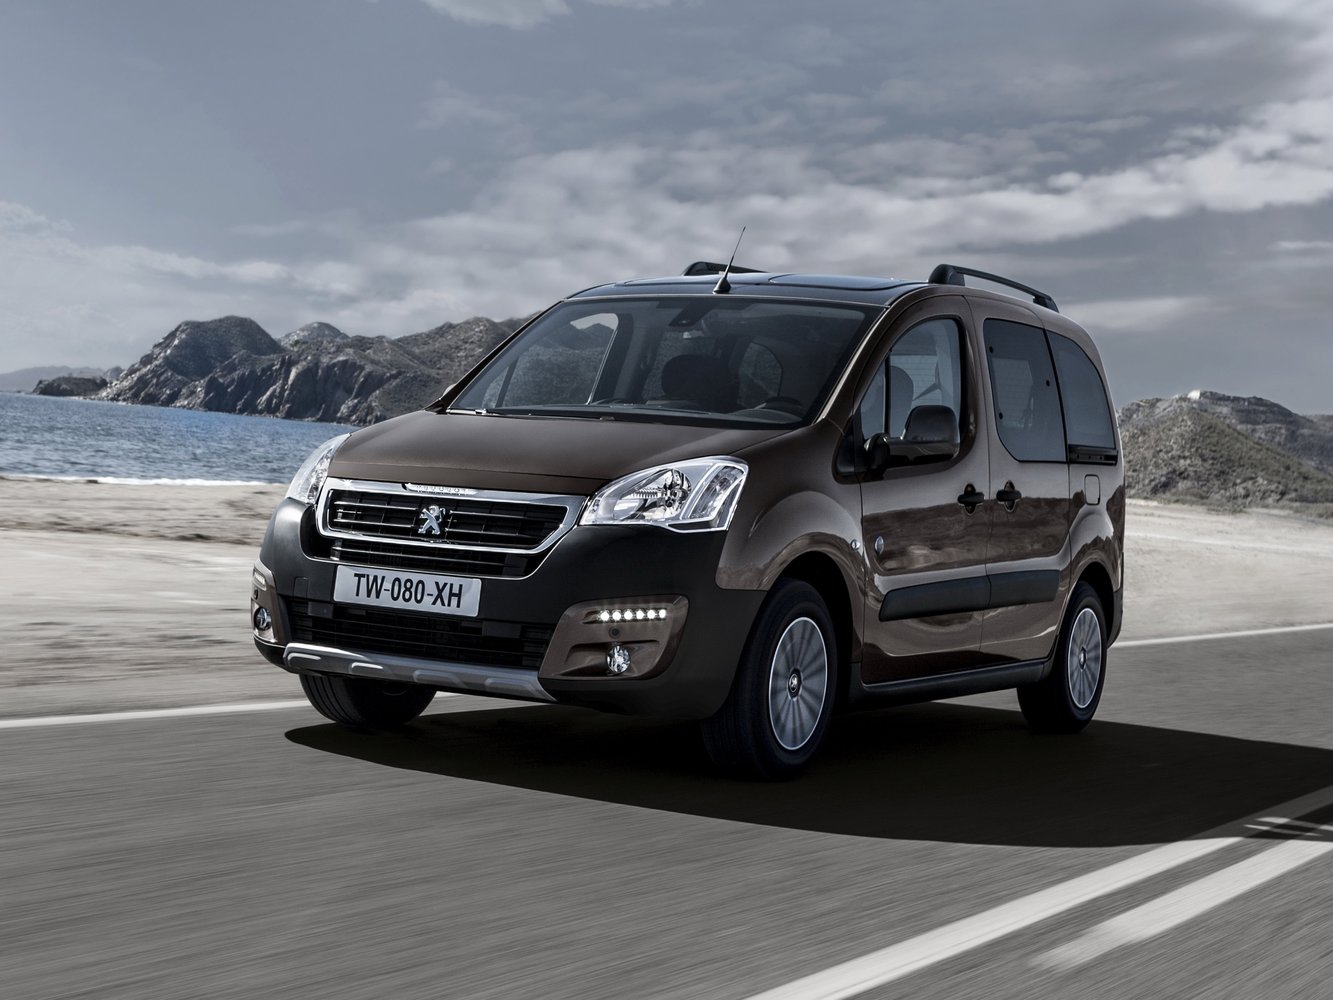 минивэн Peugeot Partner 2015 - 2016г выпуска модификация 1.6 AMT (100 л.с.)